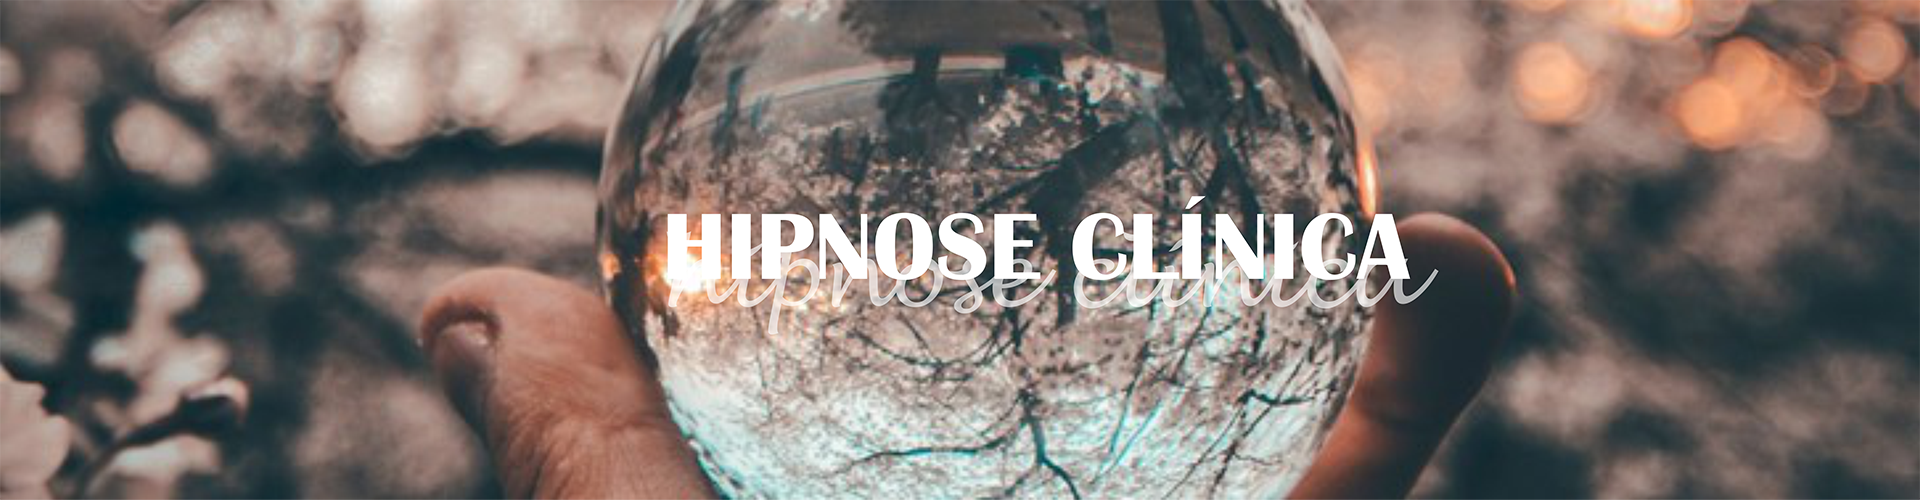 hipnose clinica22